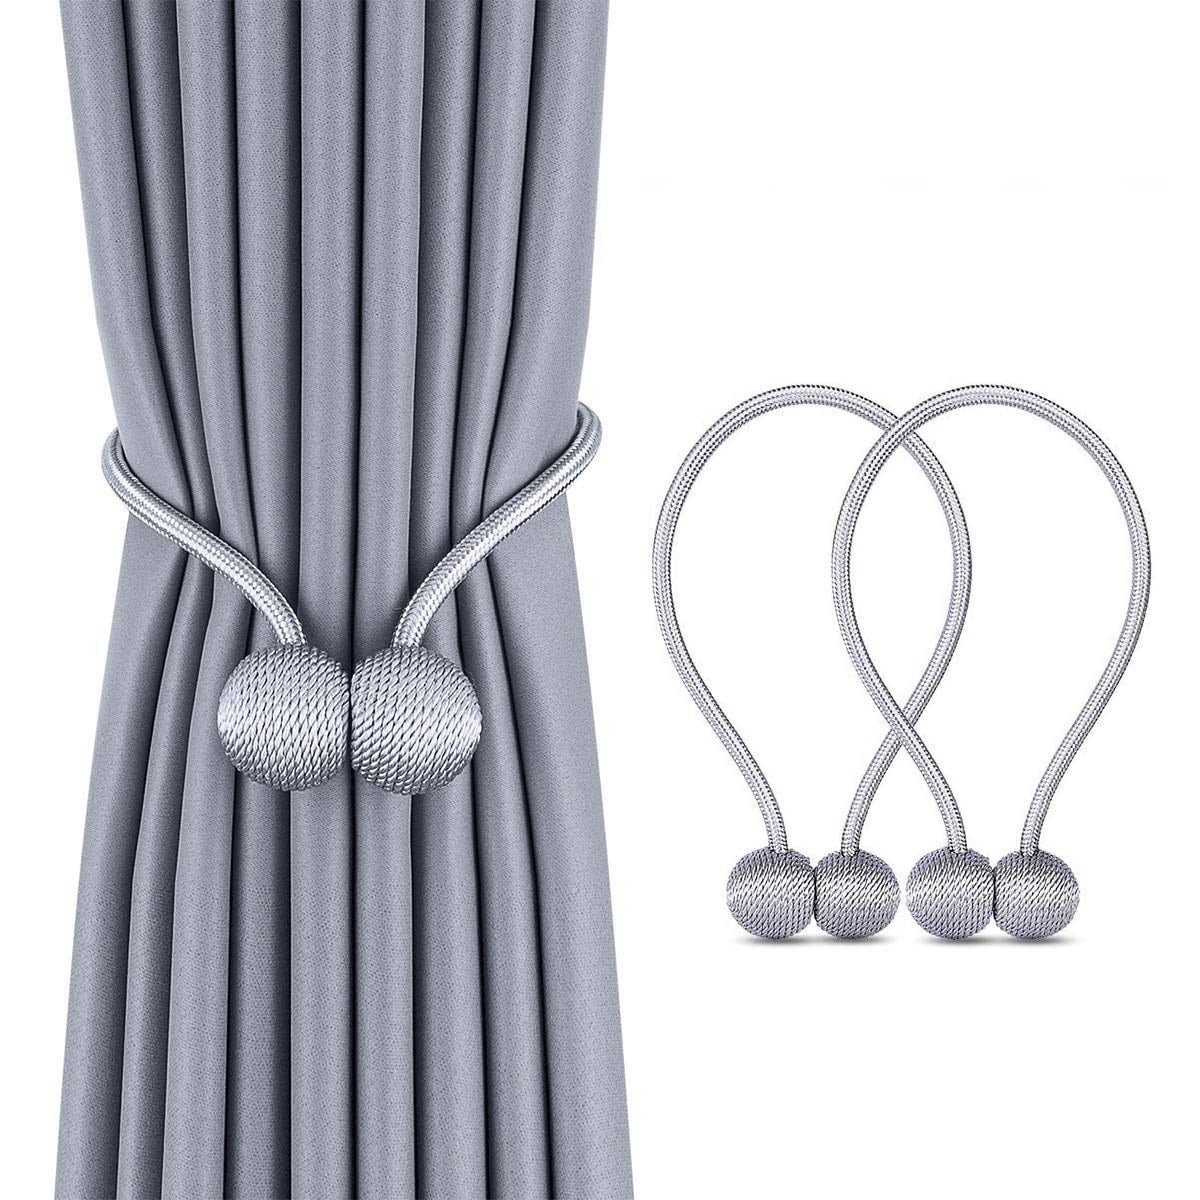 Details about   RISHNEG Magnetic Curtain Tiebacks Grey 2 Pack Decorative Curtain Holdbacks, 